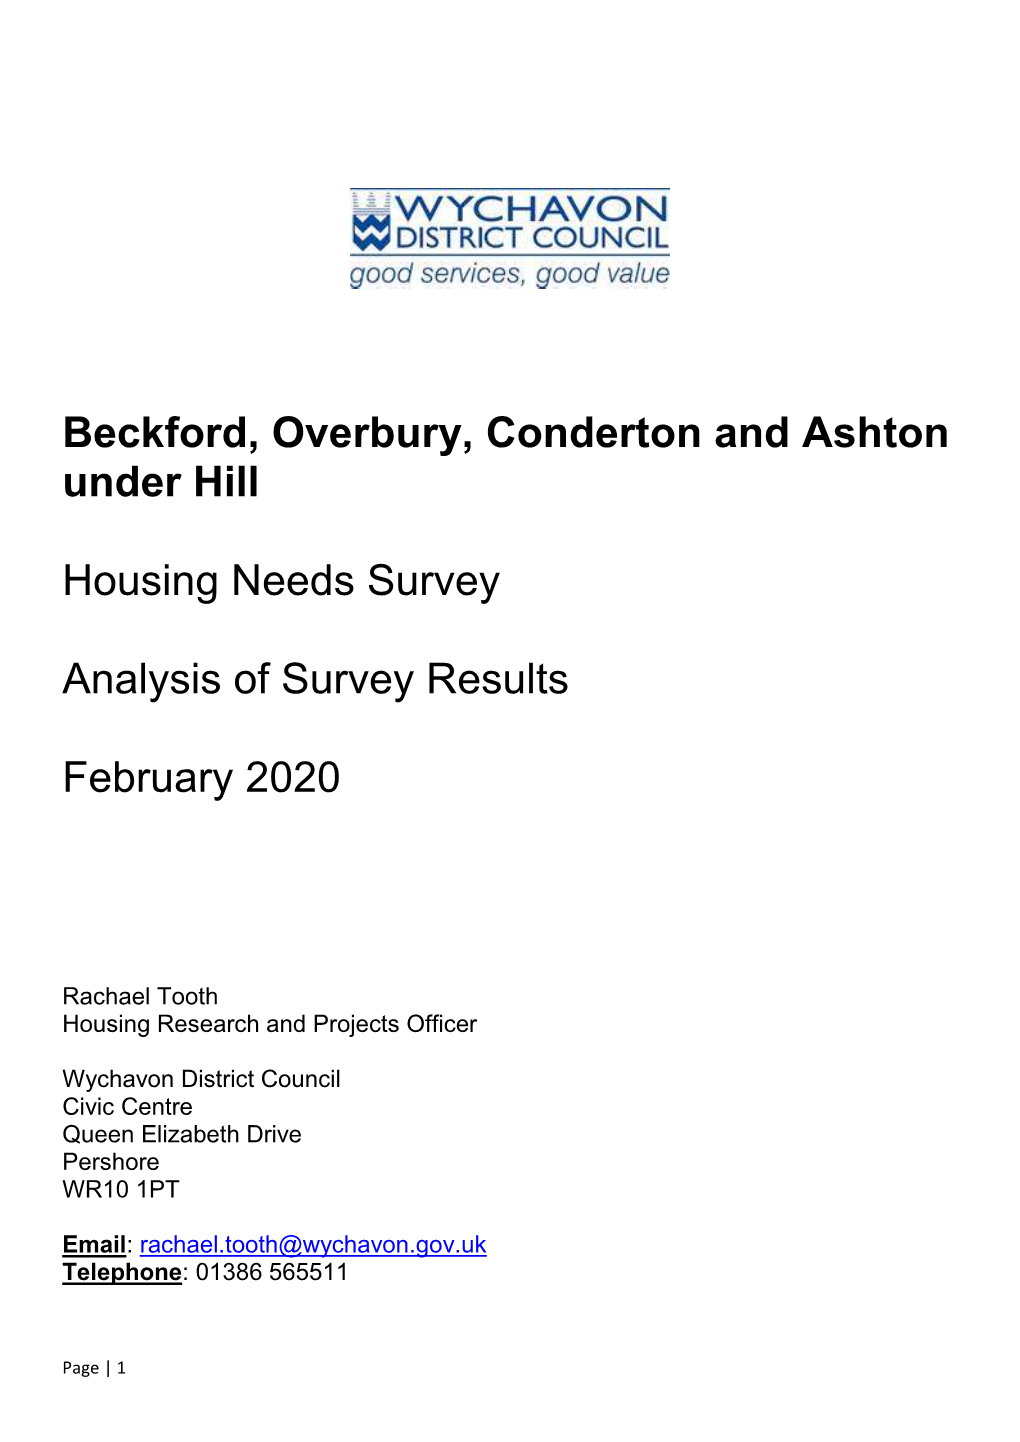 Pdf Beckford, Overbury, Conderton and Ashton Under Hill Housing